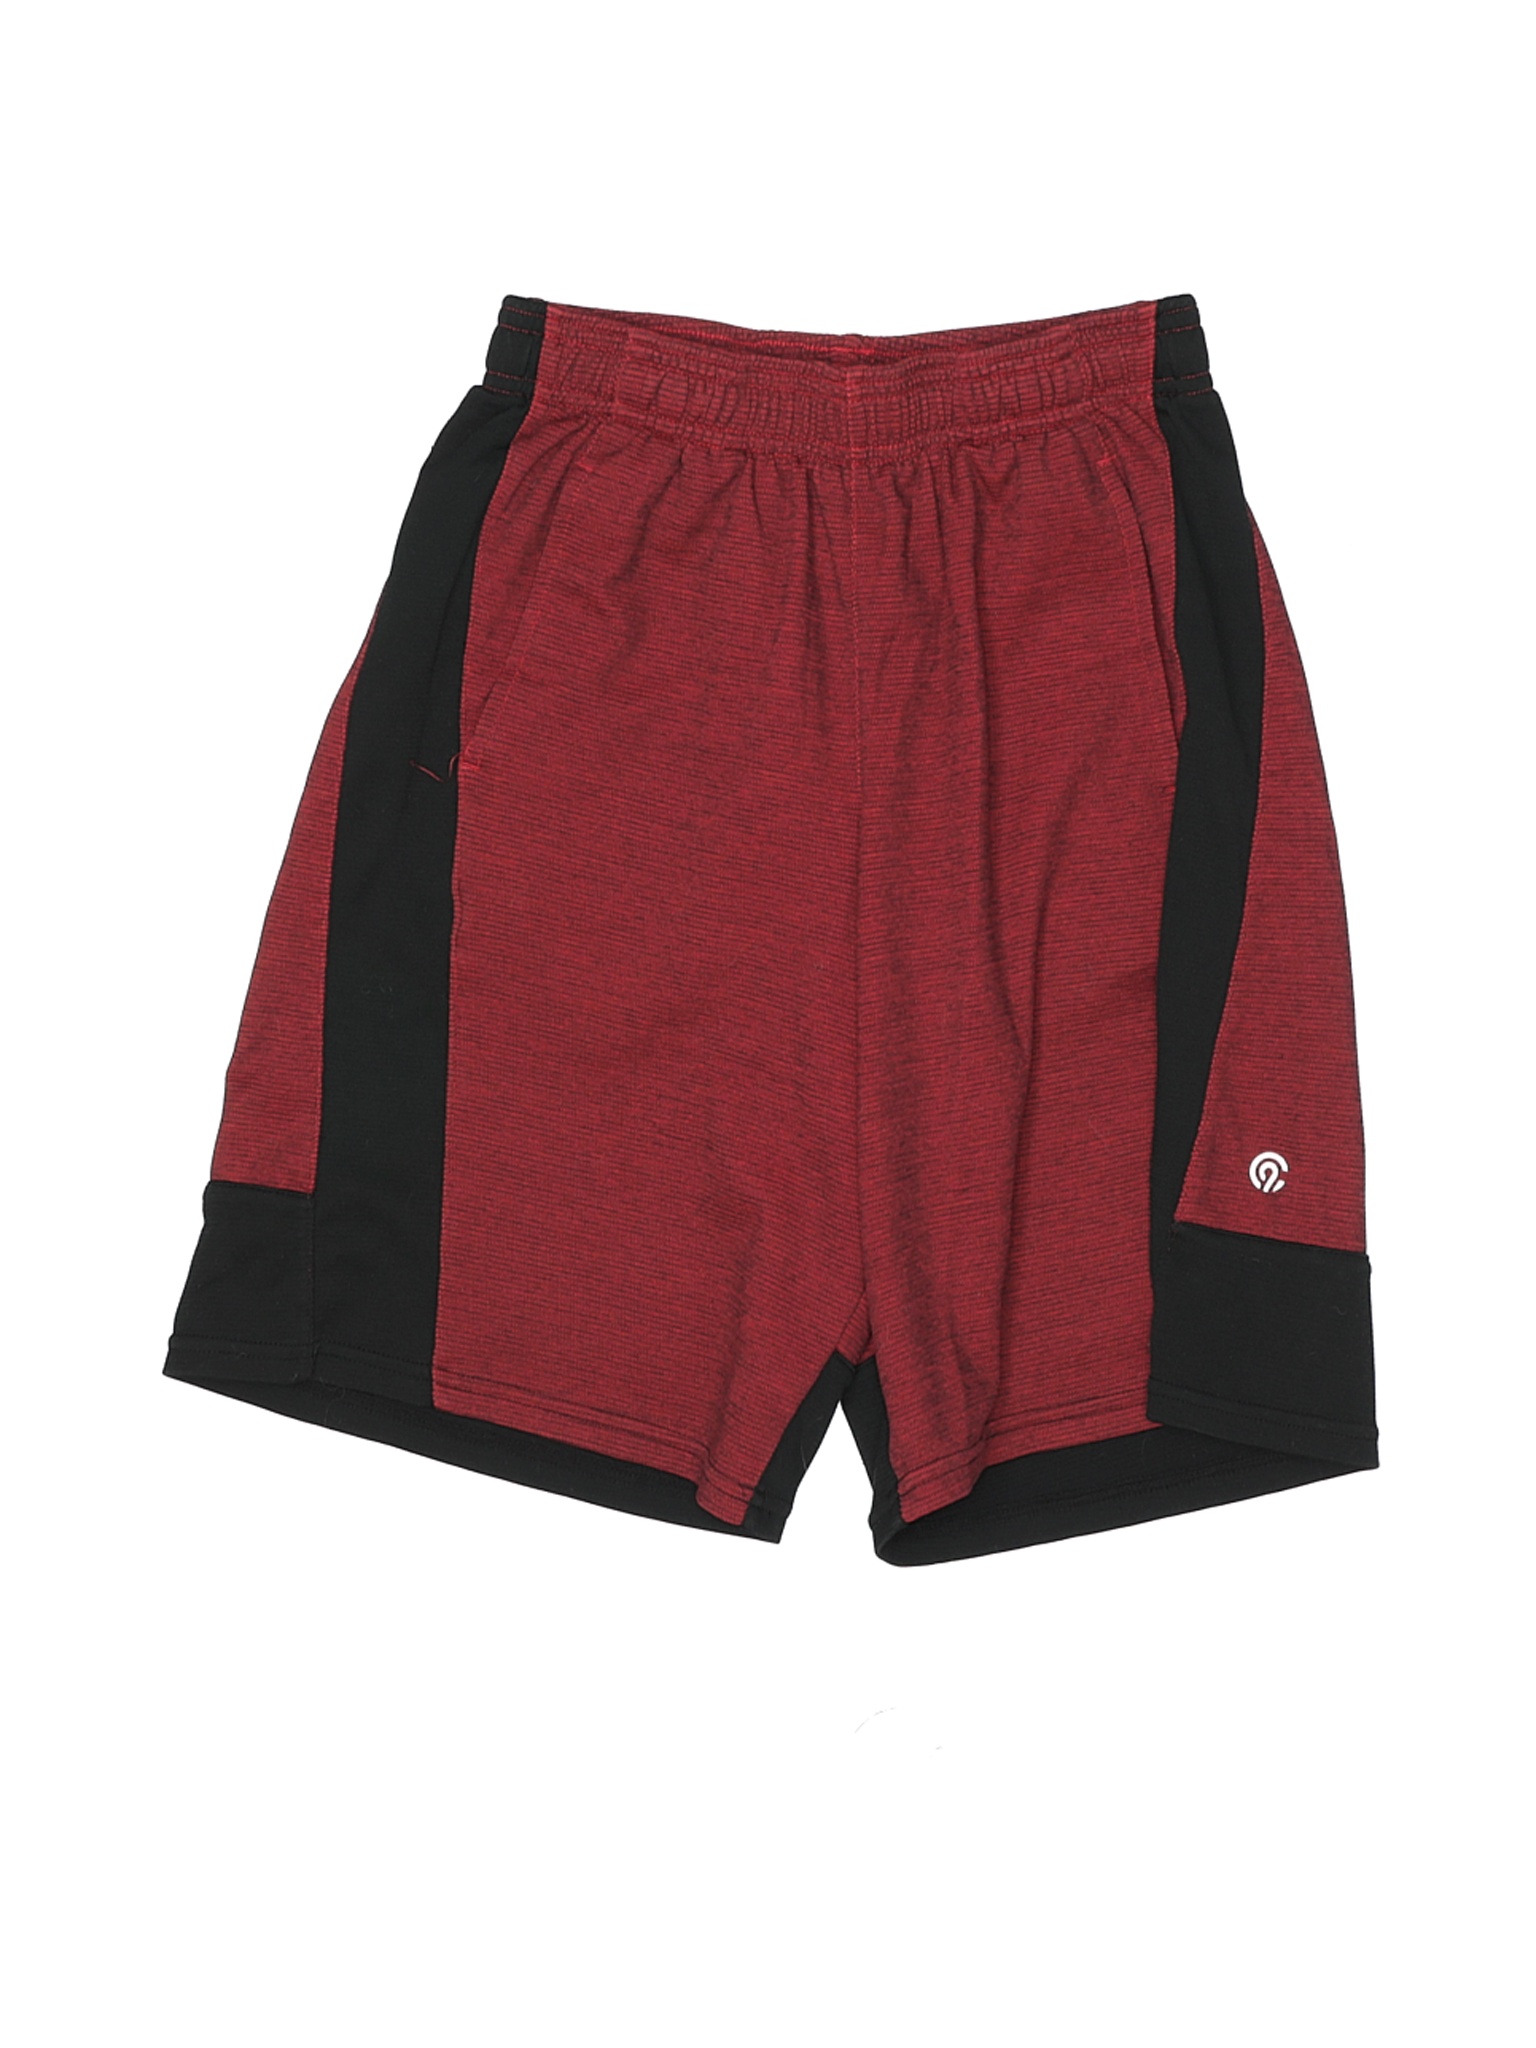 C9 By Champion Boys Red Athletic Shorts Large kids | eBay